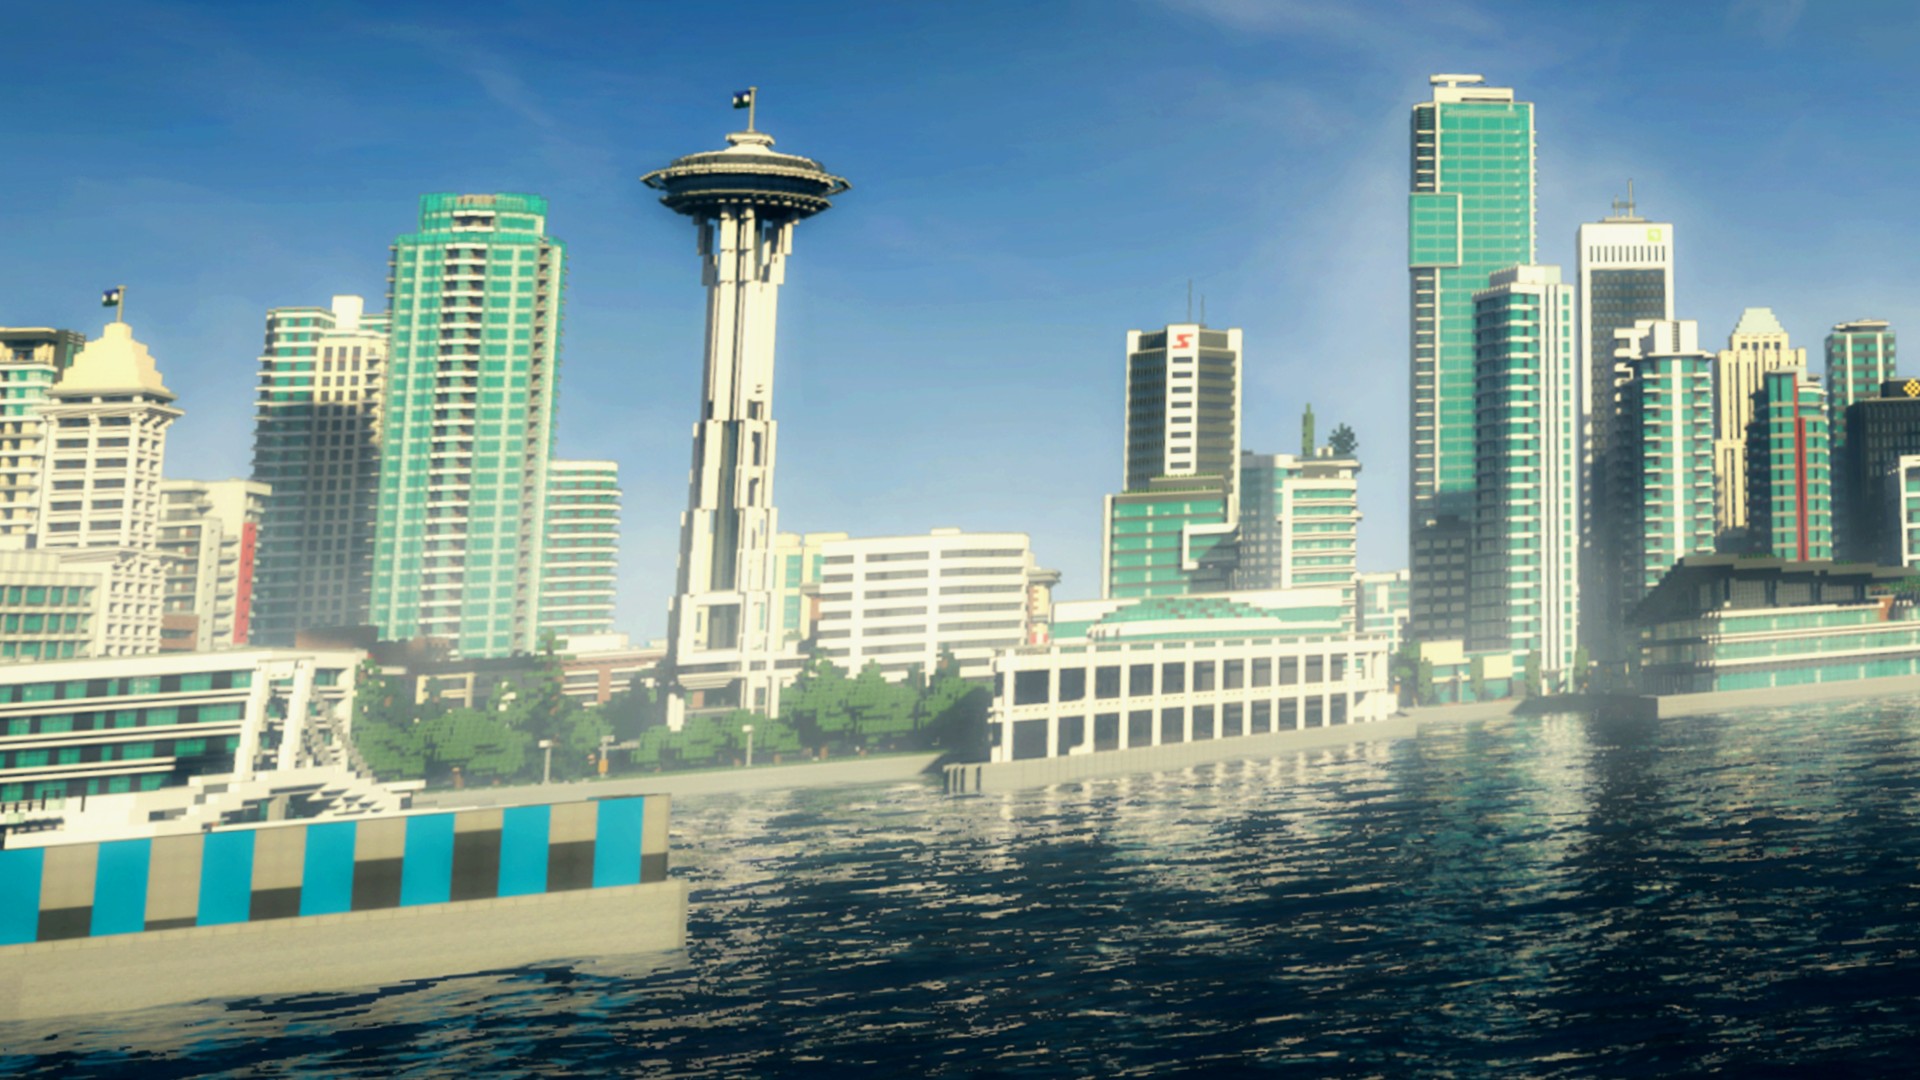 Best Minecraft cities